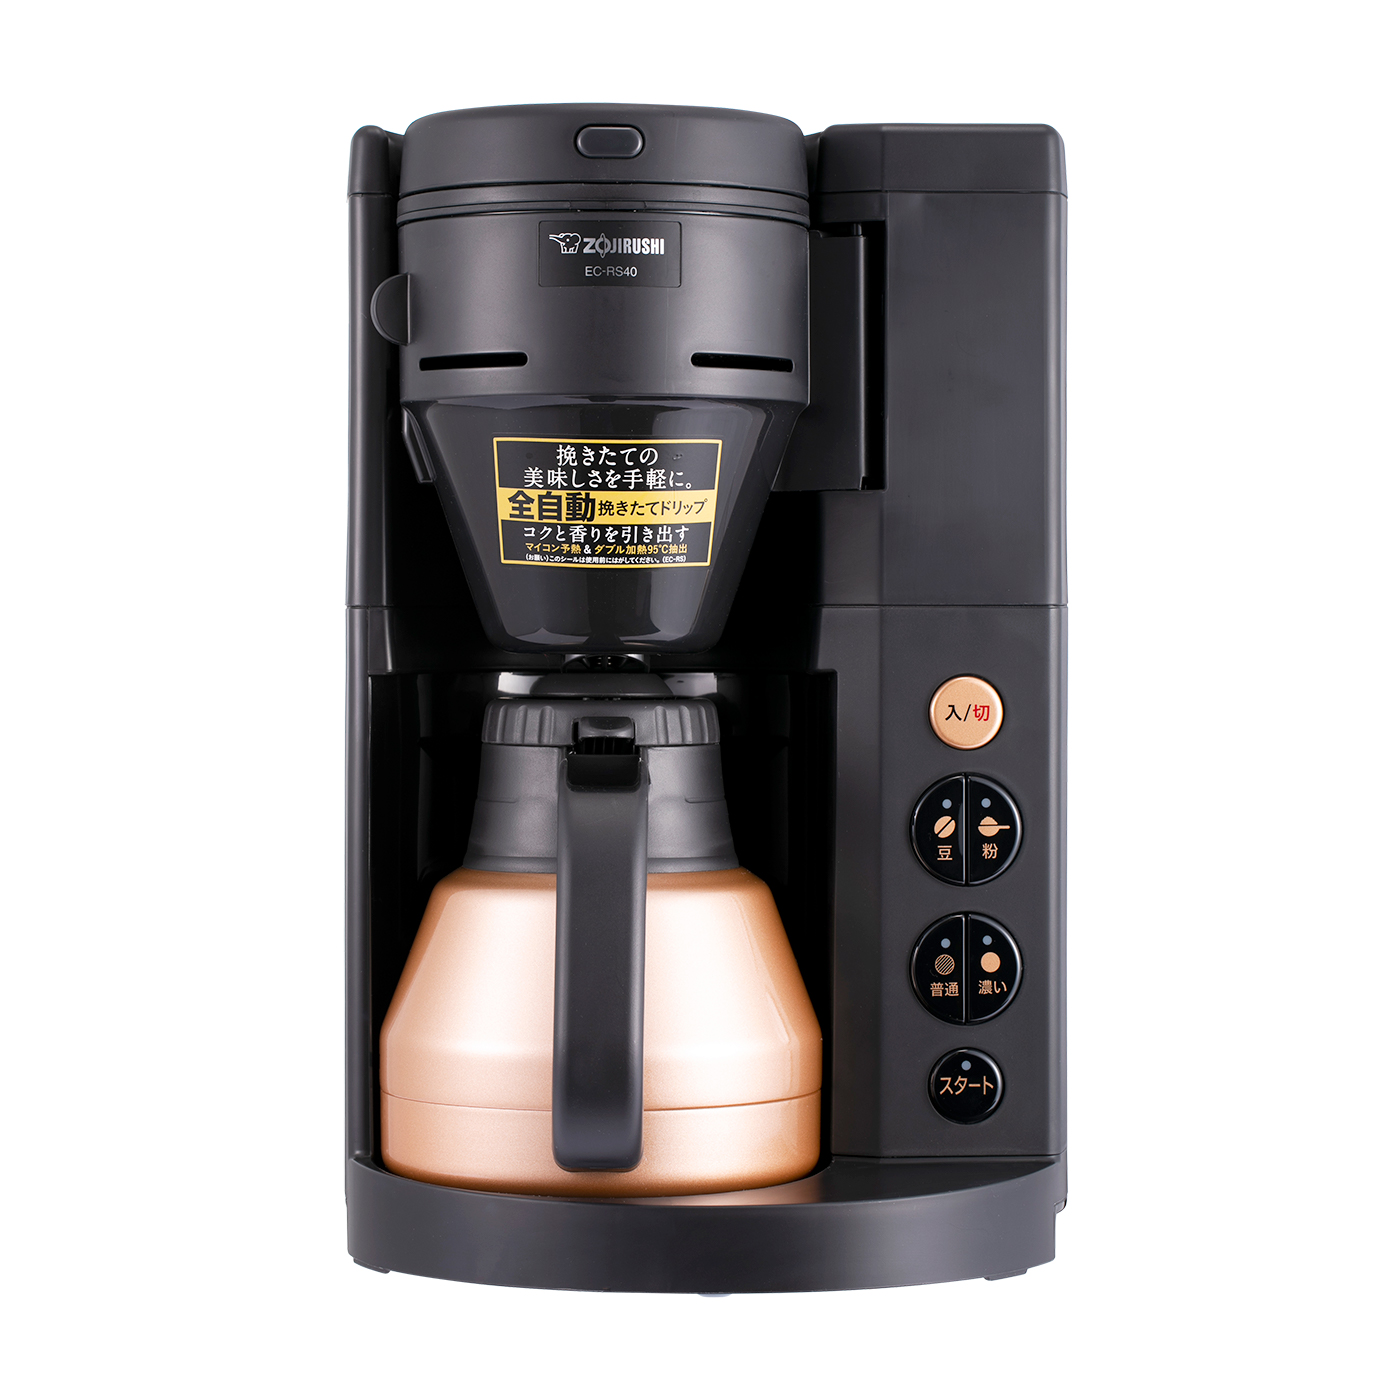 Panasonic NC-A57-K BLACK 全自動コーヒーメーカー - コーヒーメーカー 